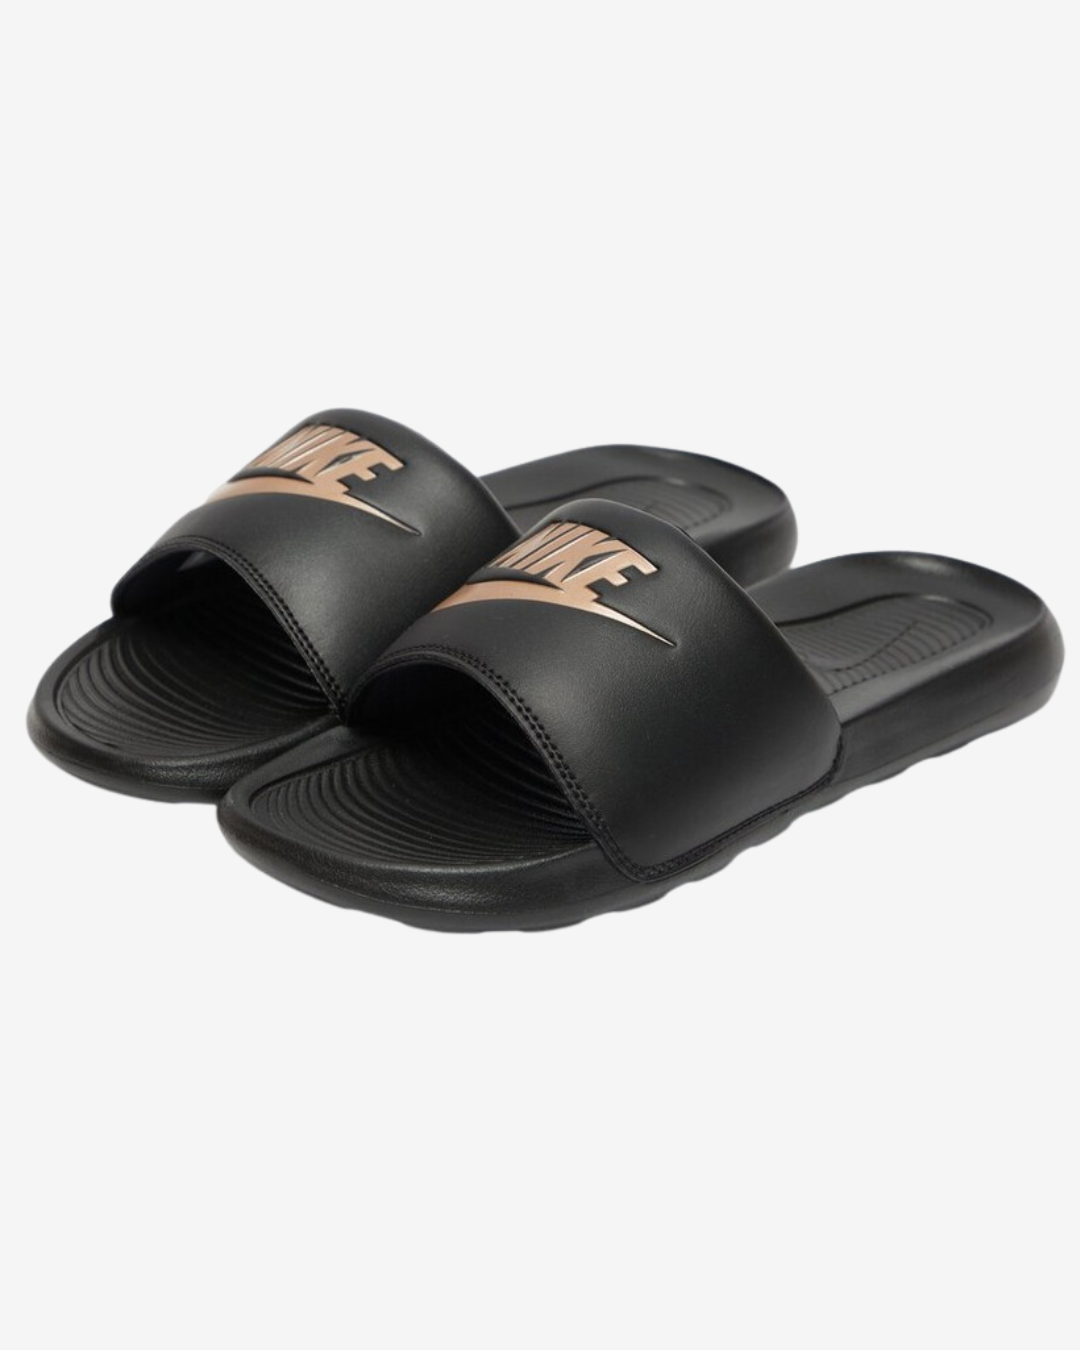 Nike Victori slippers - Sort / Bronze - Str. 40.5 - Modish.dk